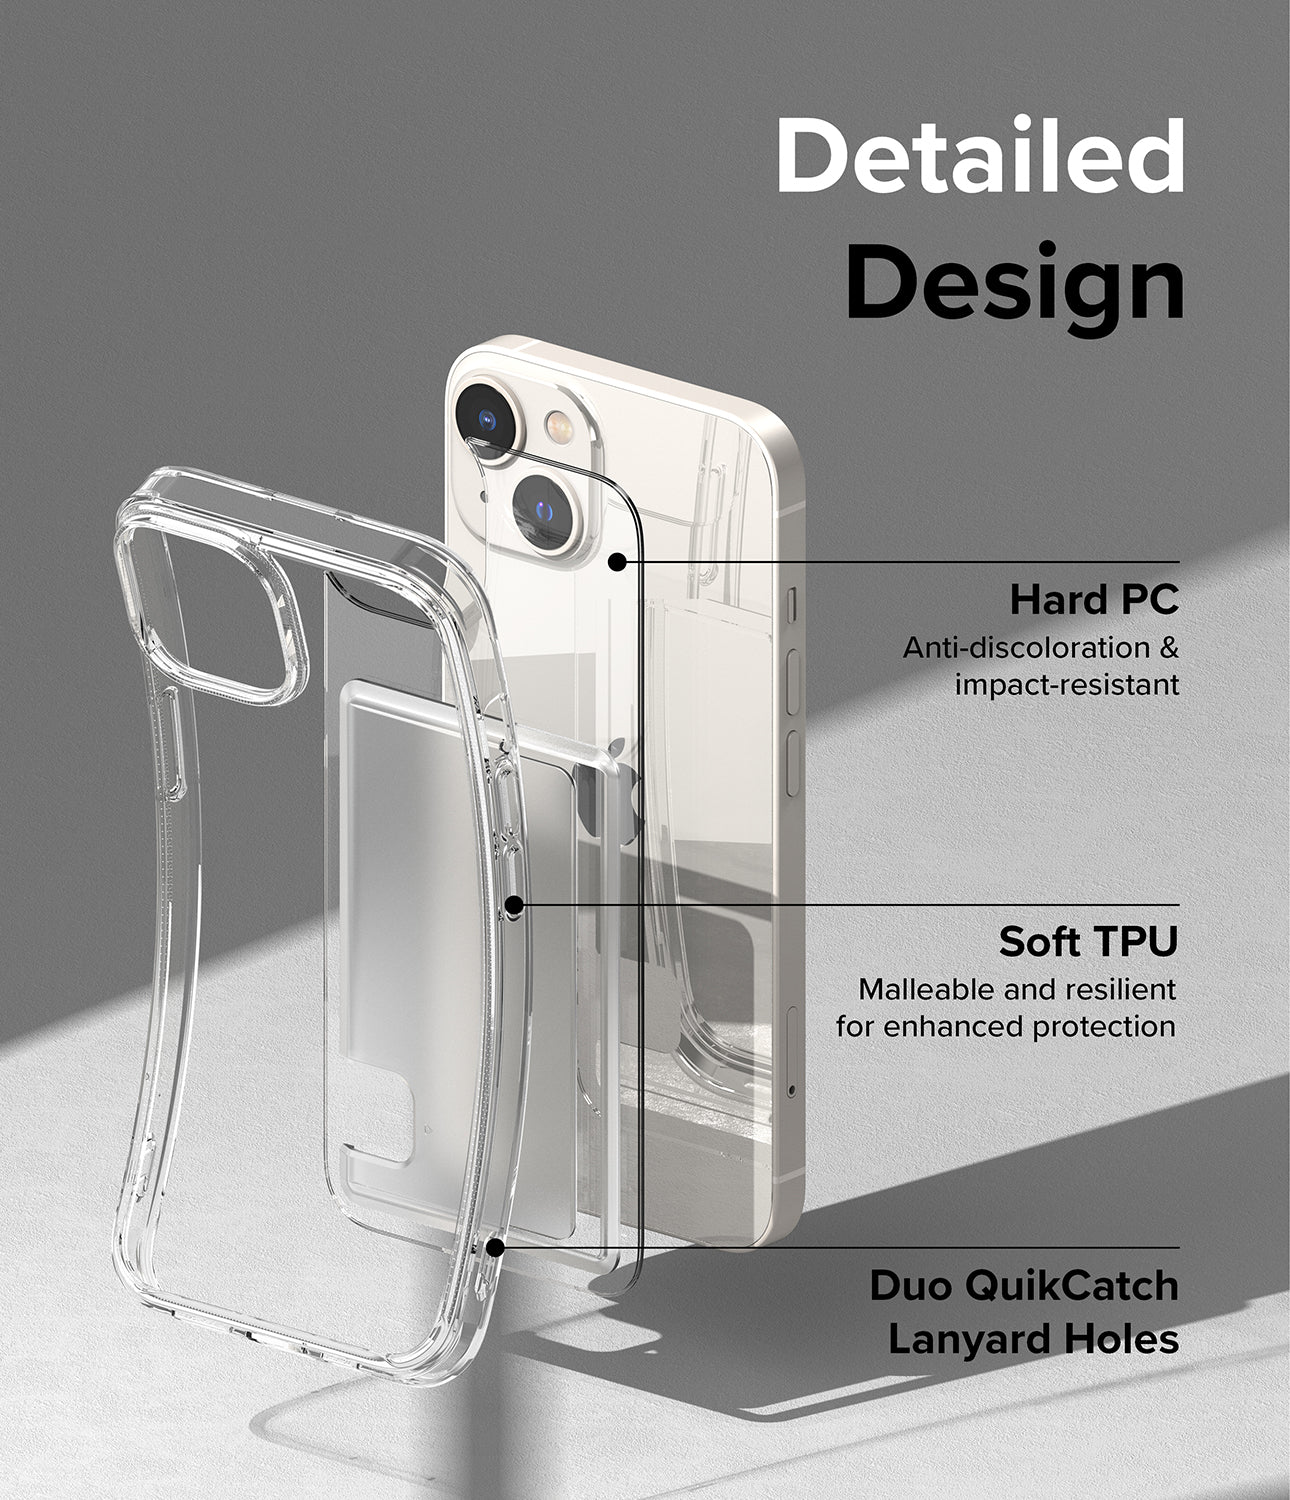 iPhone 14 Case | Fusion Card